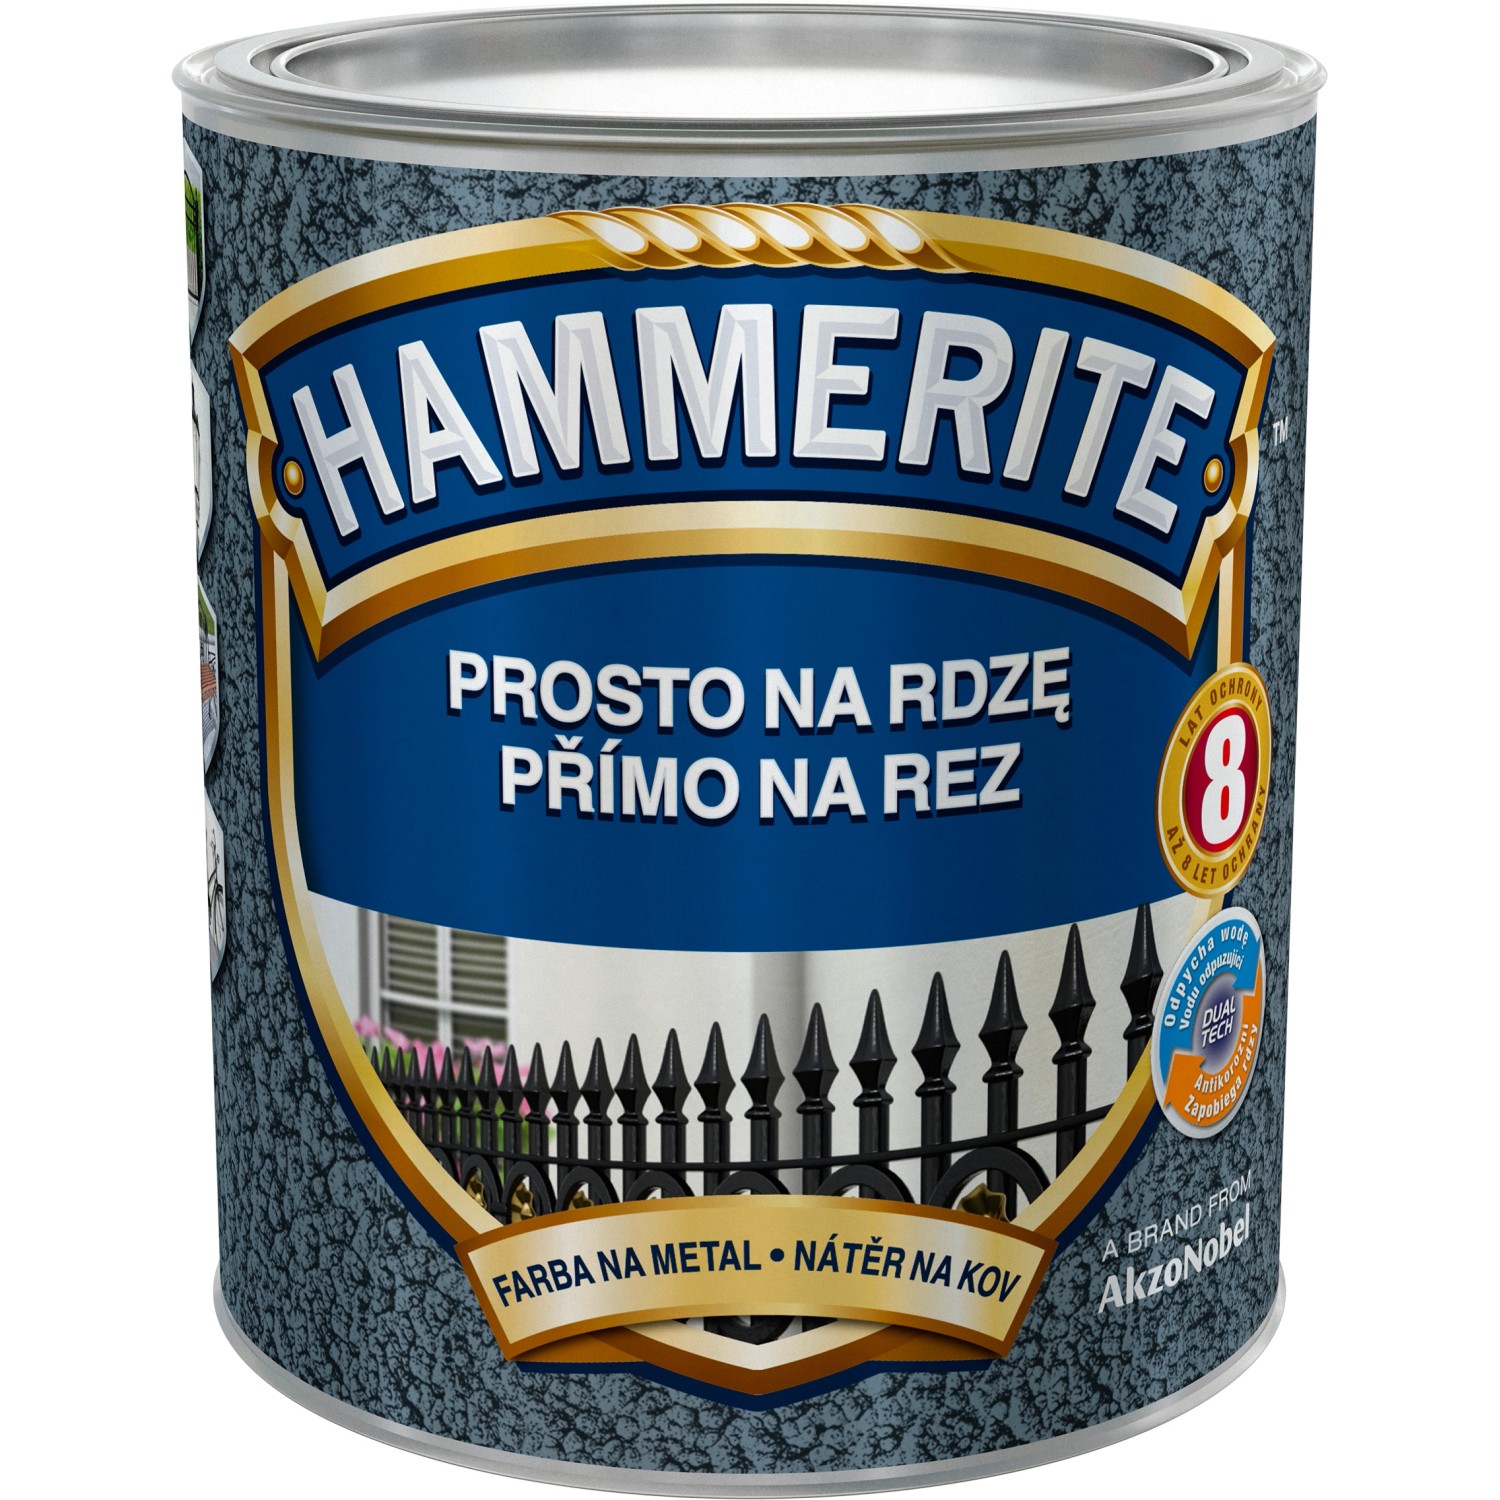 Hammerite rust beater коричневый фото 99